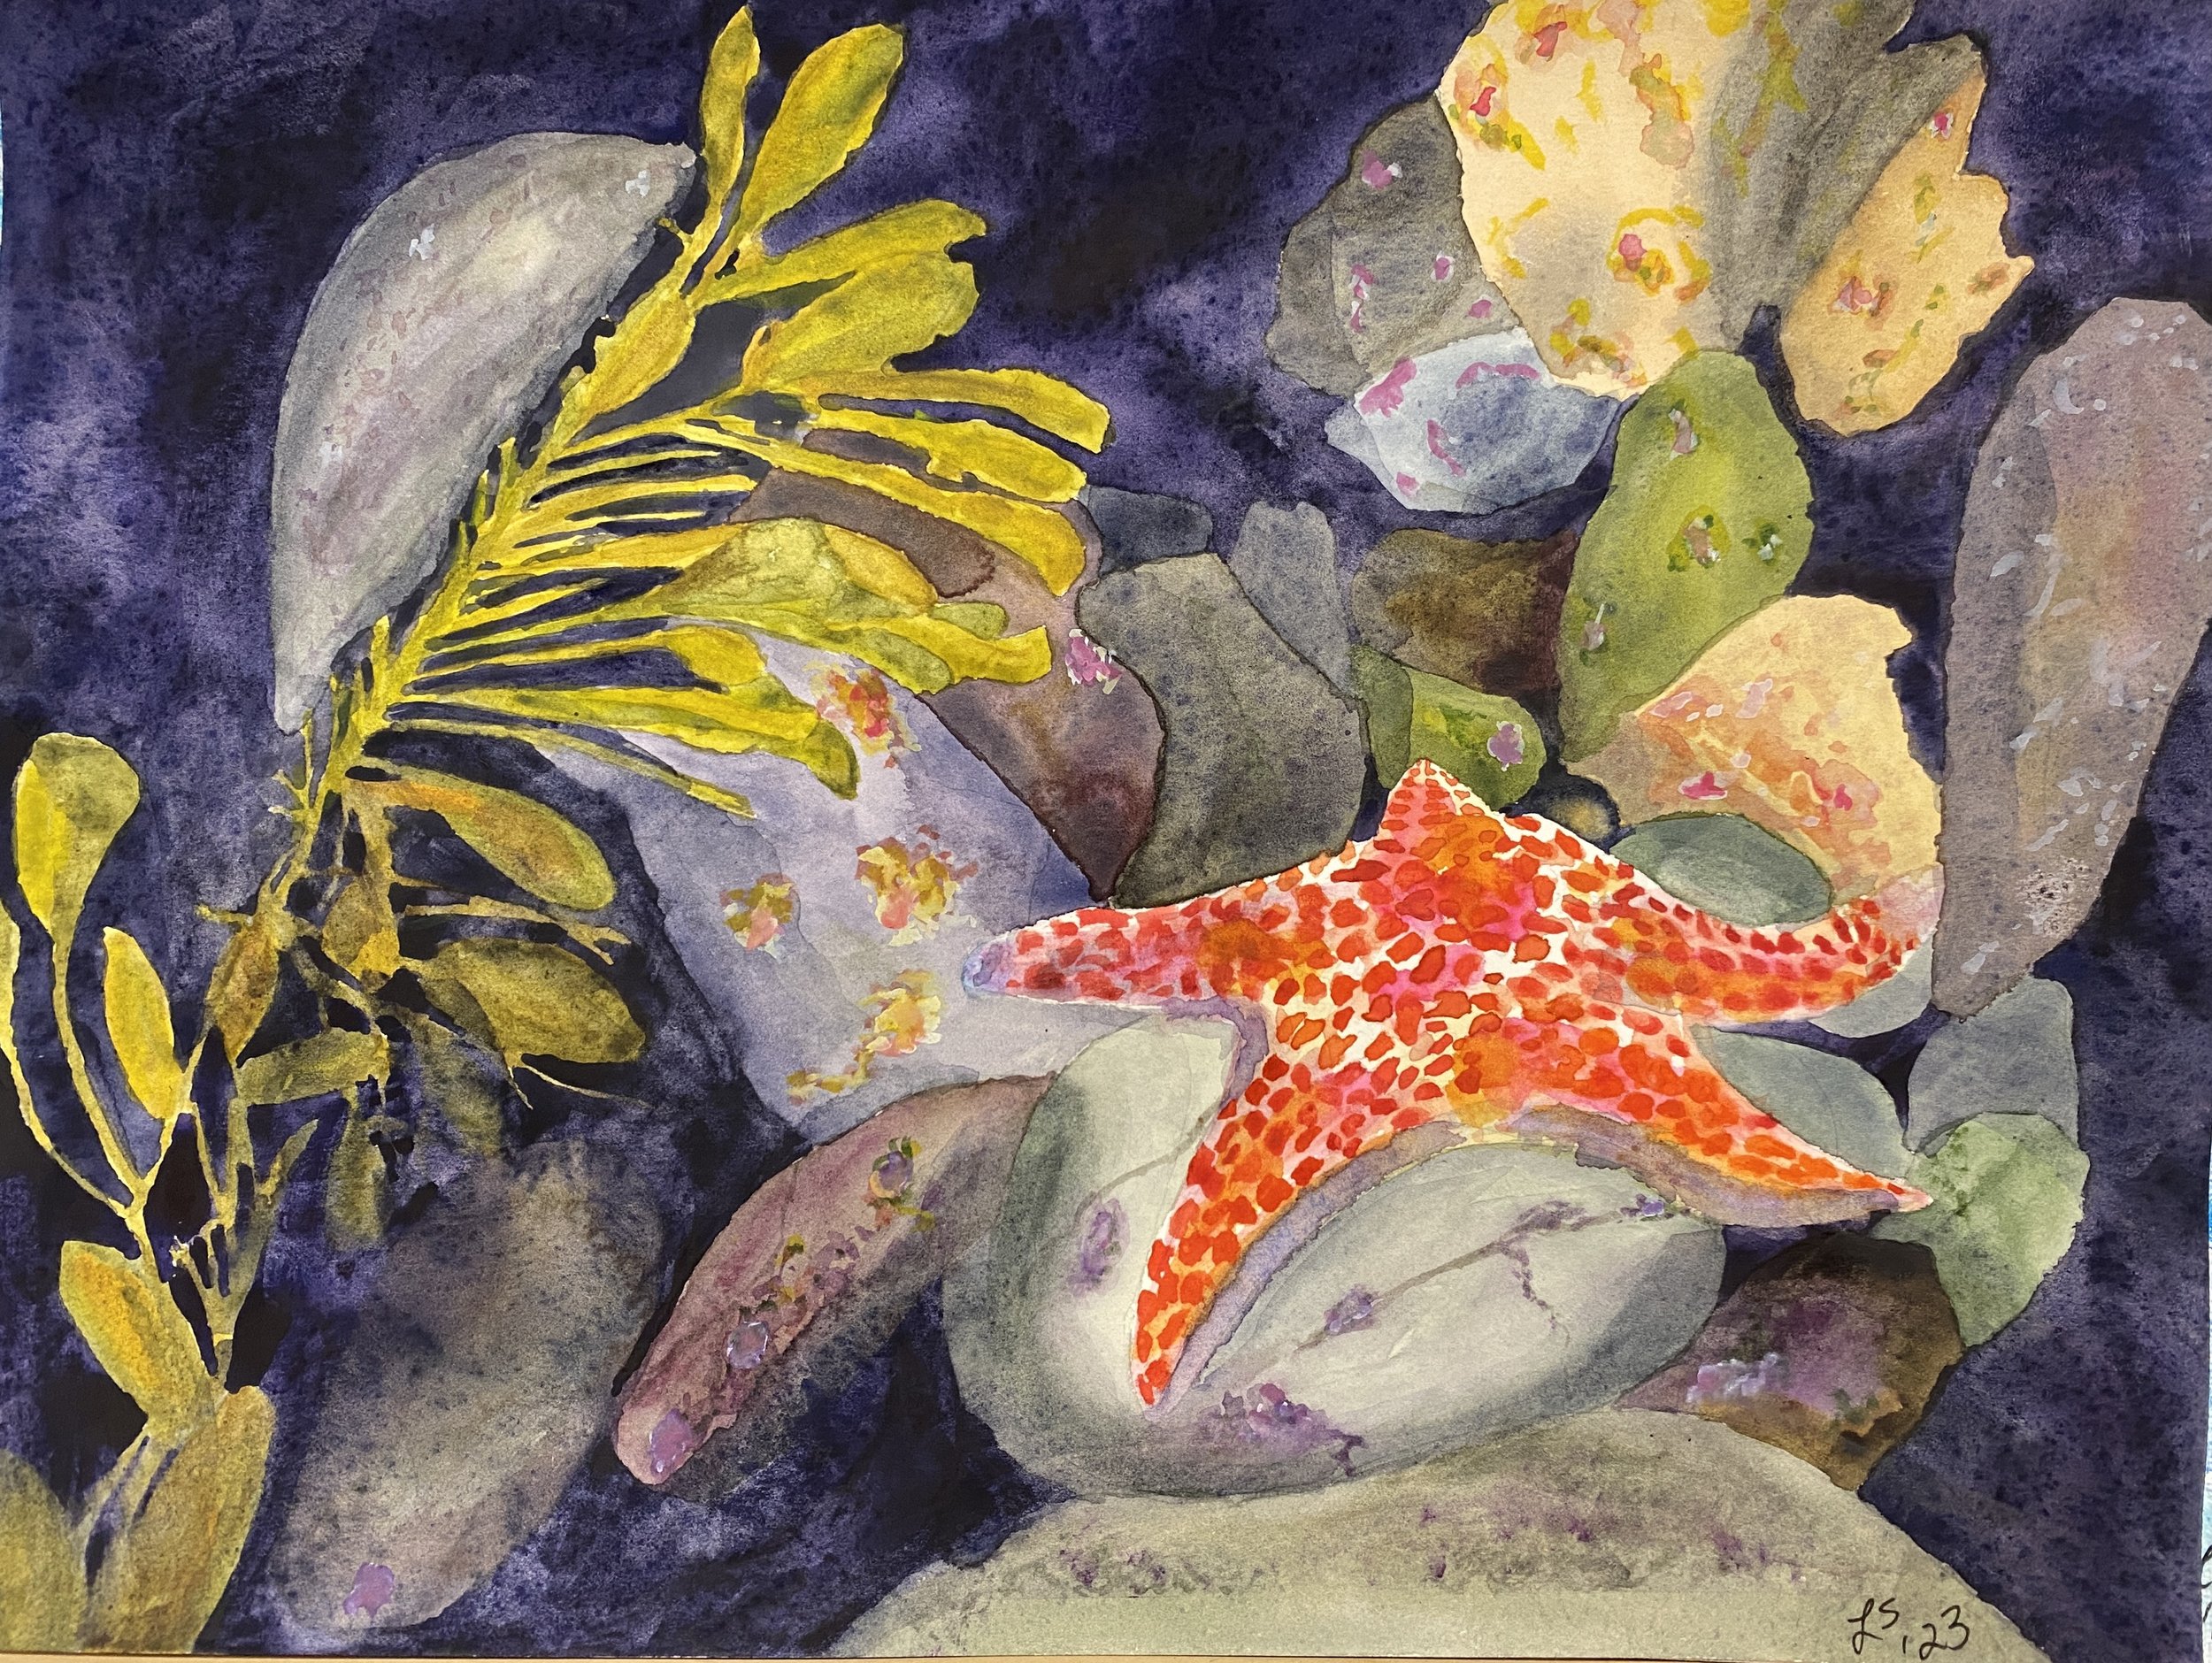 Starfish in tide pool.JPG